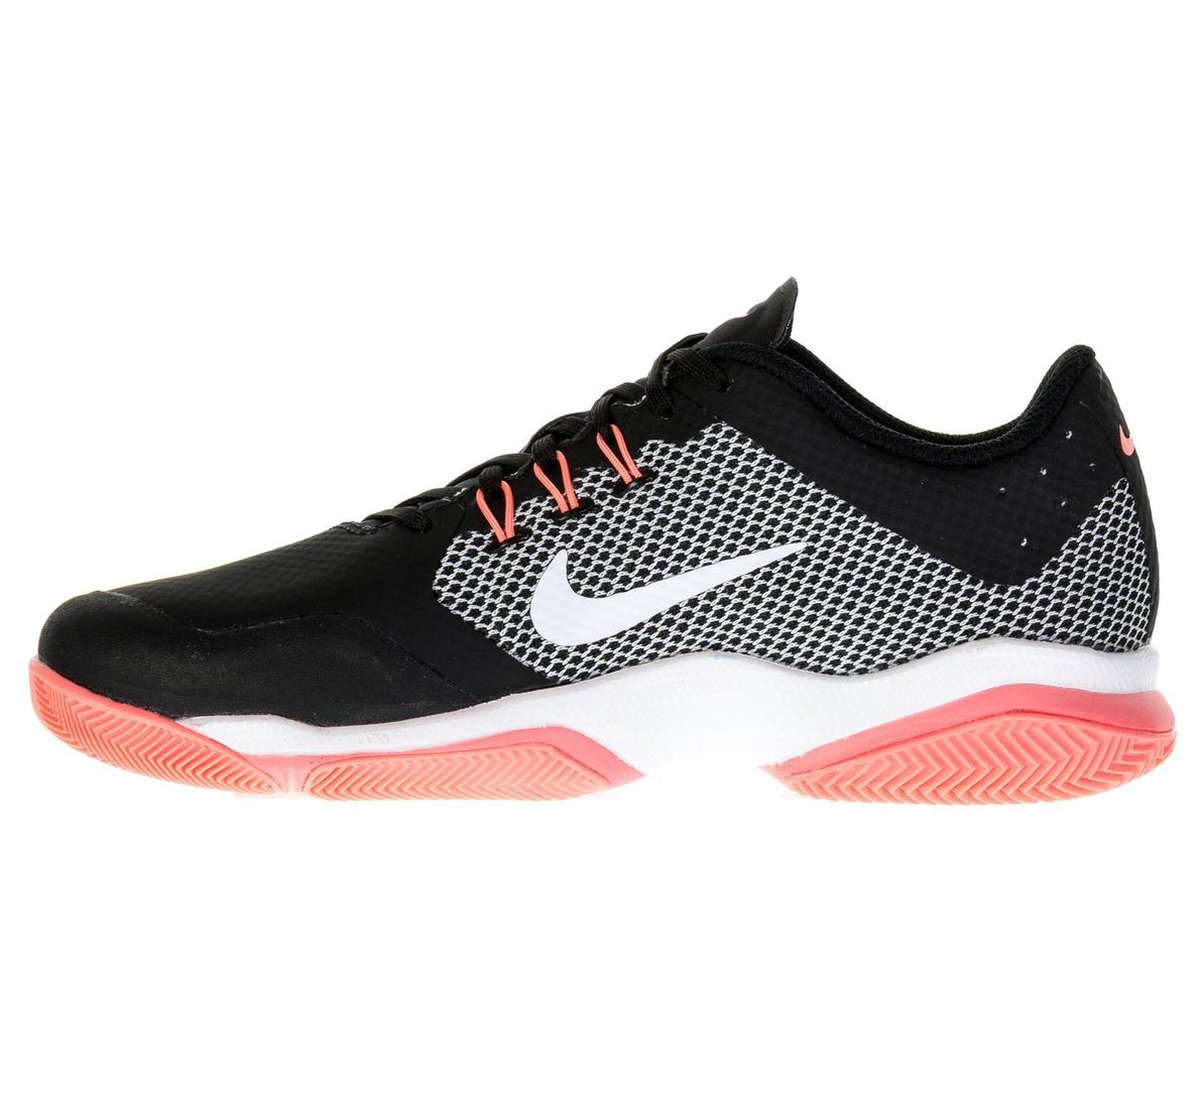 Perth formule grens Nike Air Zoom Ultra Tennisschoenen - Maat 38 - Vrouwen - zwart/wit/roze |  bol.com